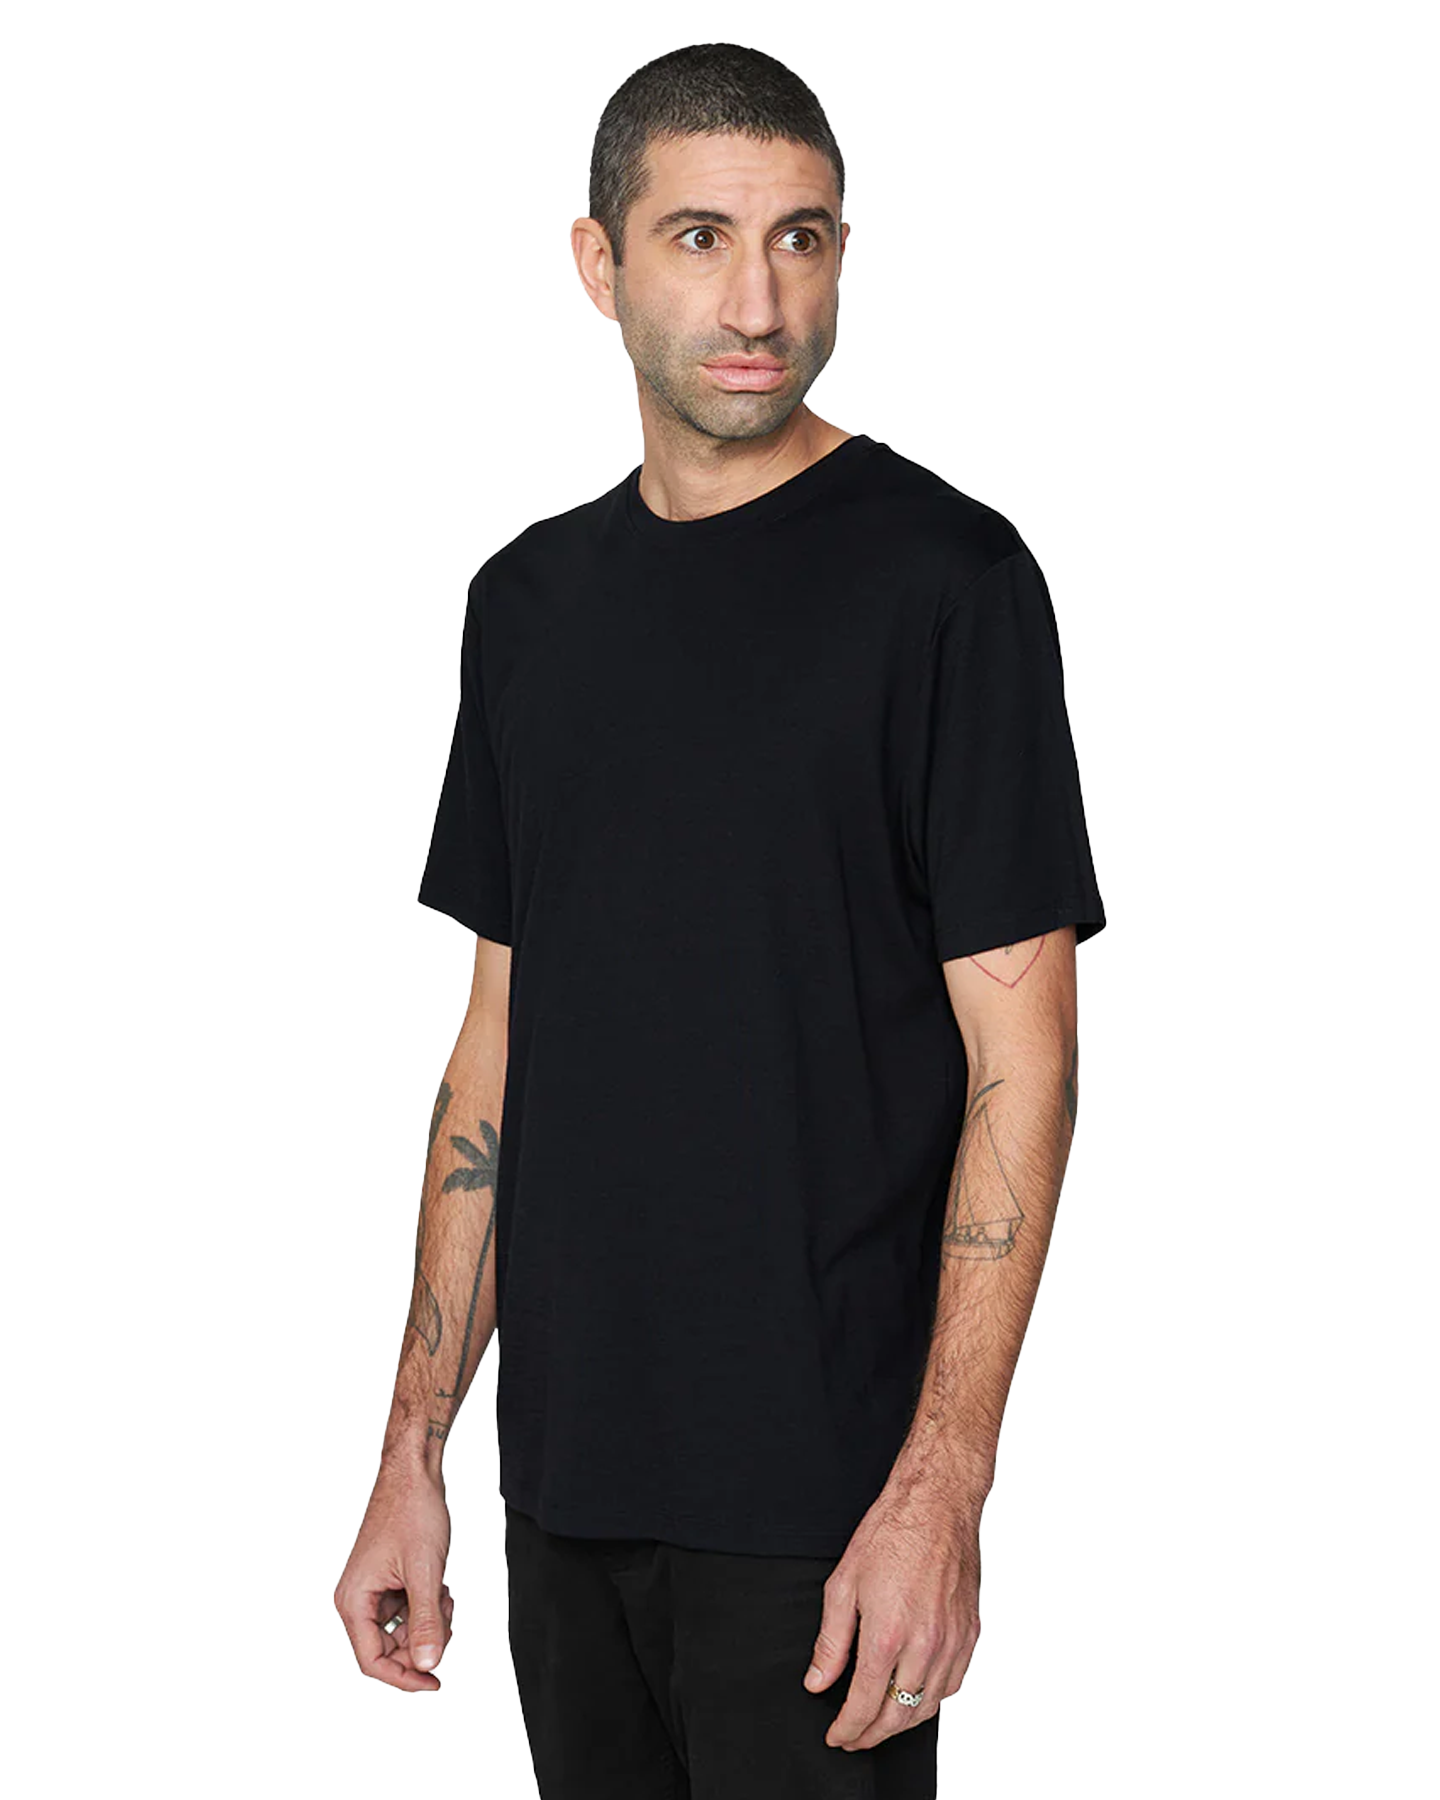 Le Bent Men's Ultralight Short Sleeve Tee - Black Shirts & Tops - SnowSkiersWarehouse